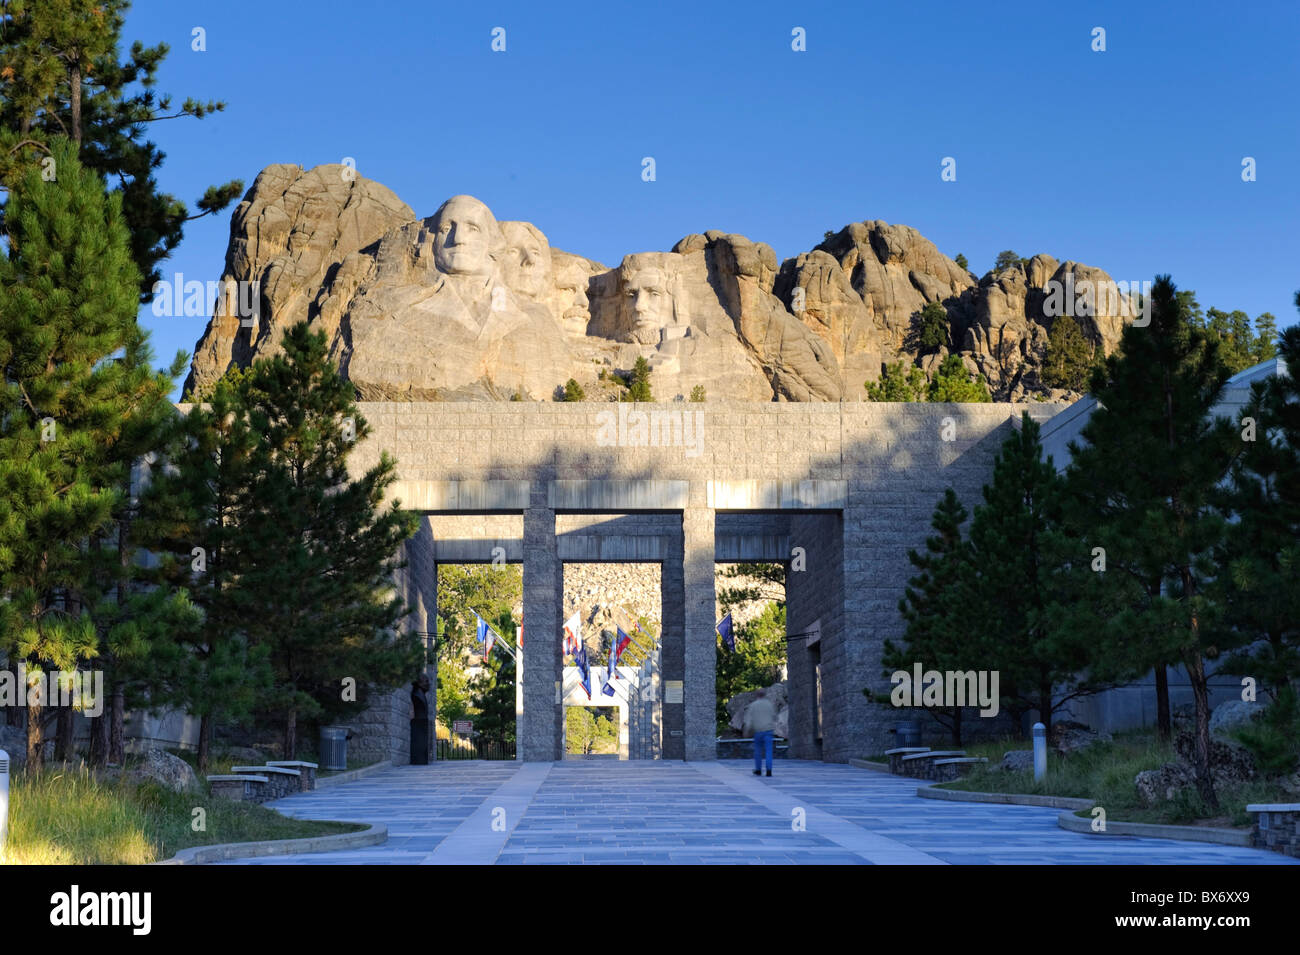 Mount Rushmore National Memorial, South Dakota, USA Banque D'Images